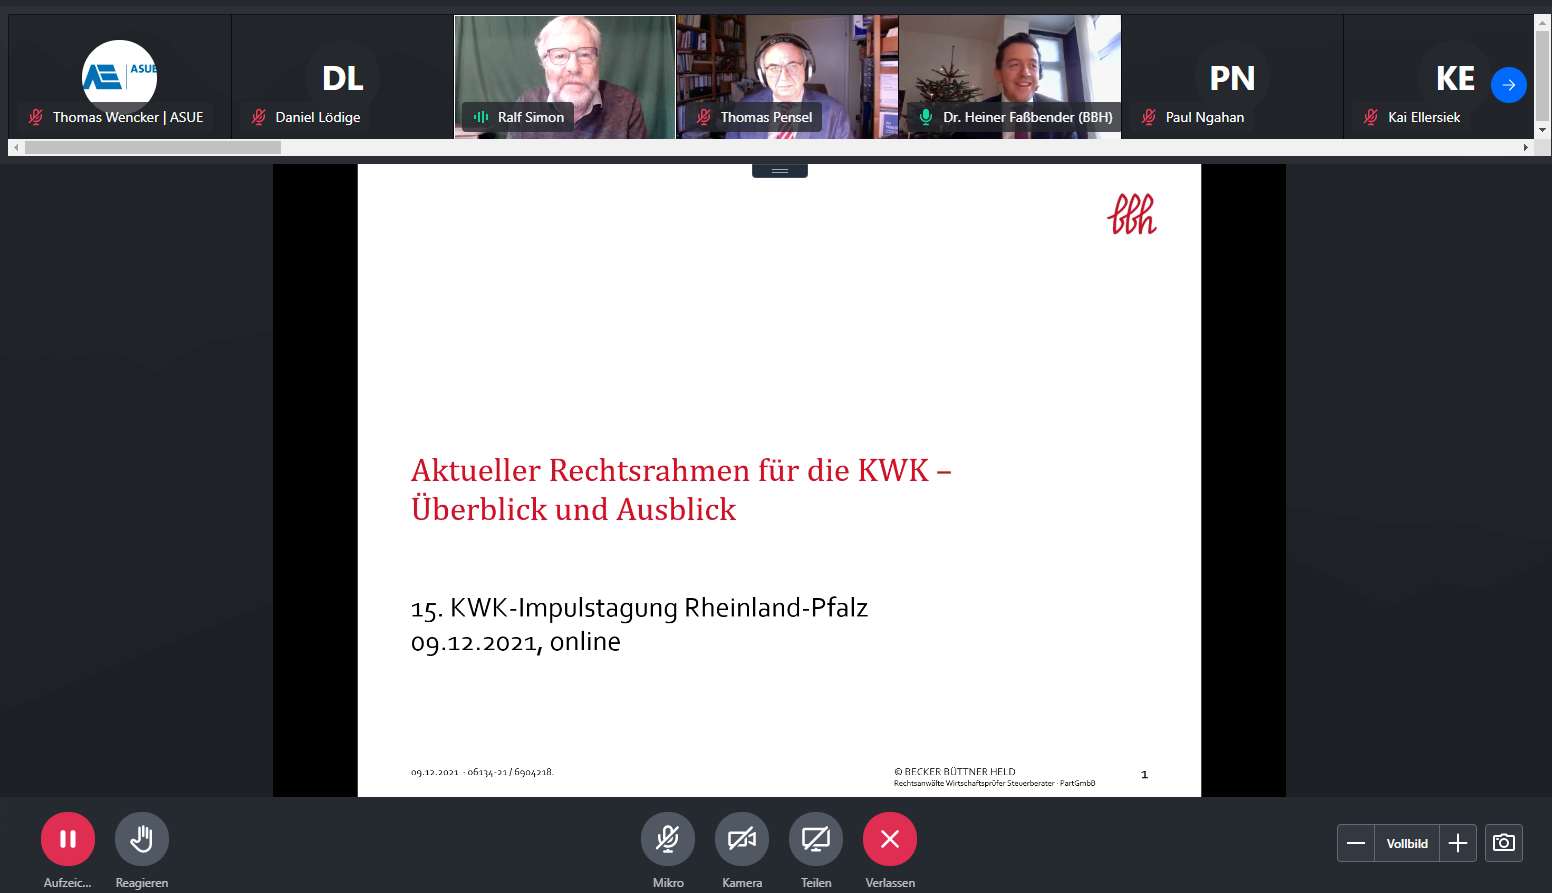 KWK-Impulstagung: Screenshot mit Thomas Pensel, Prof. Simon und Dr. Faßbender